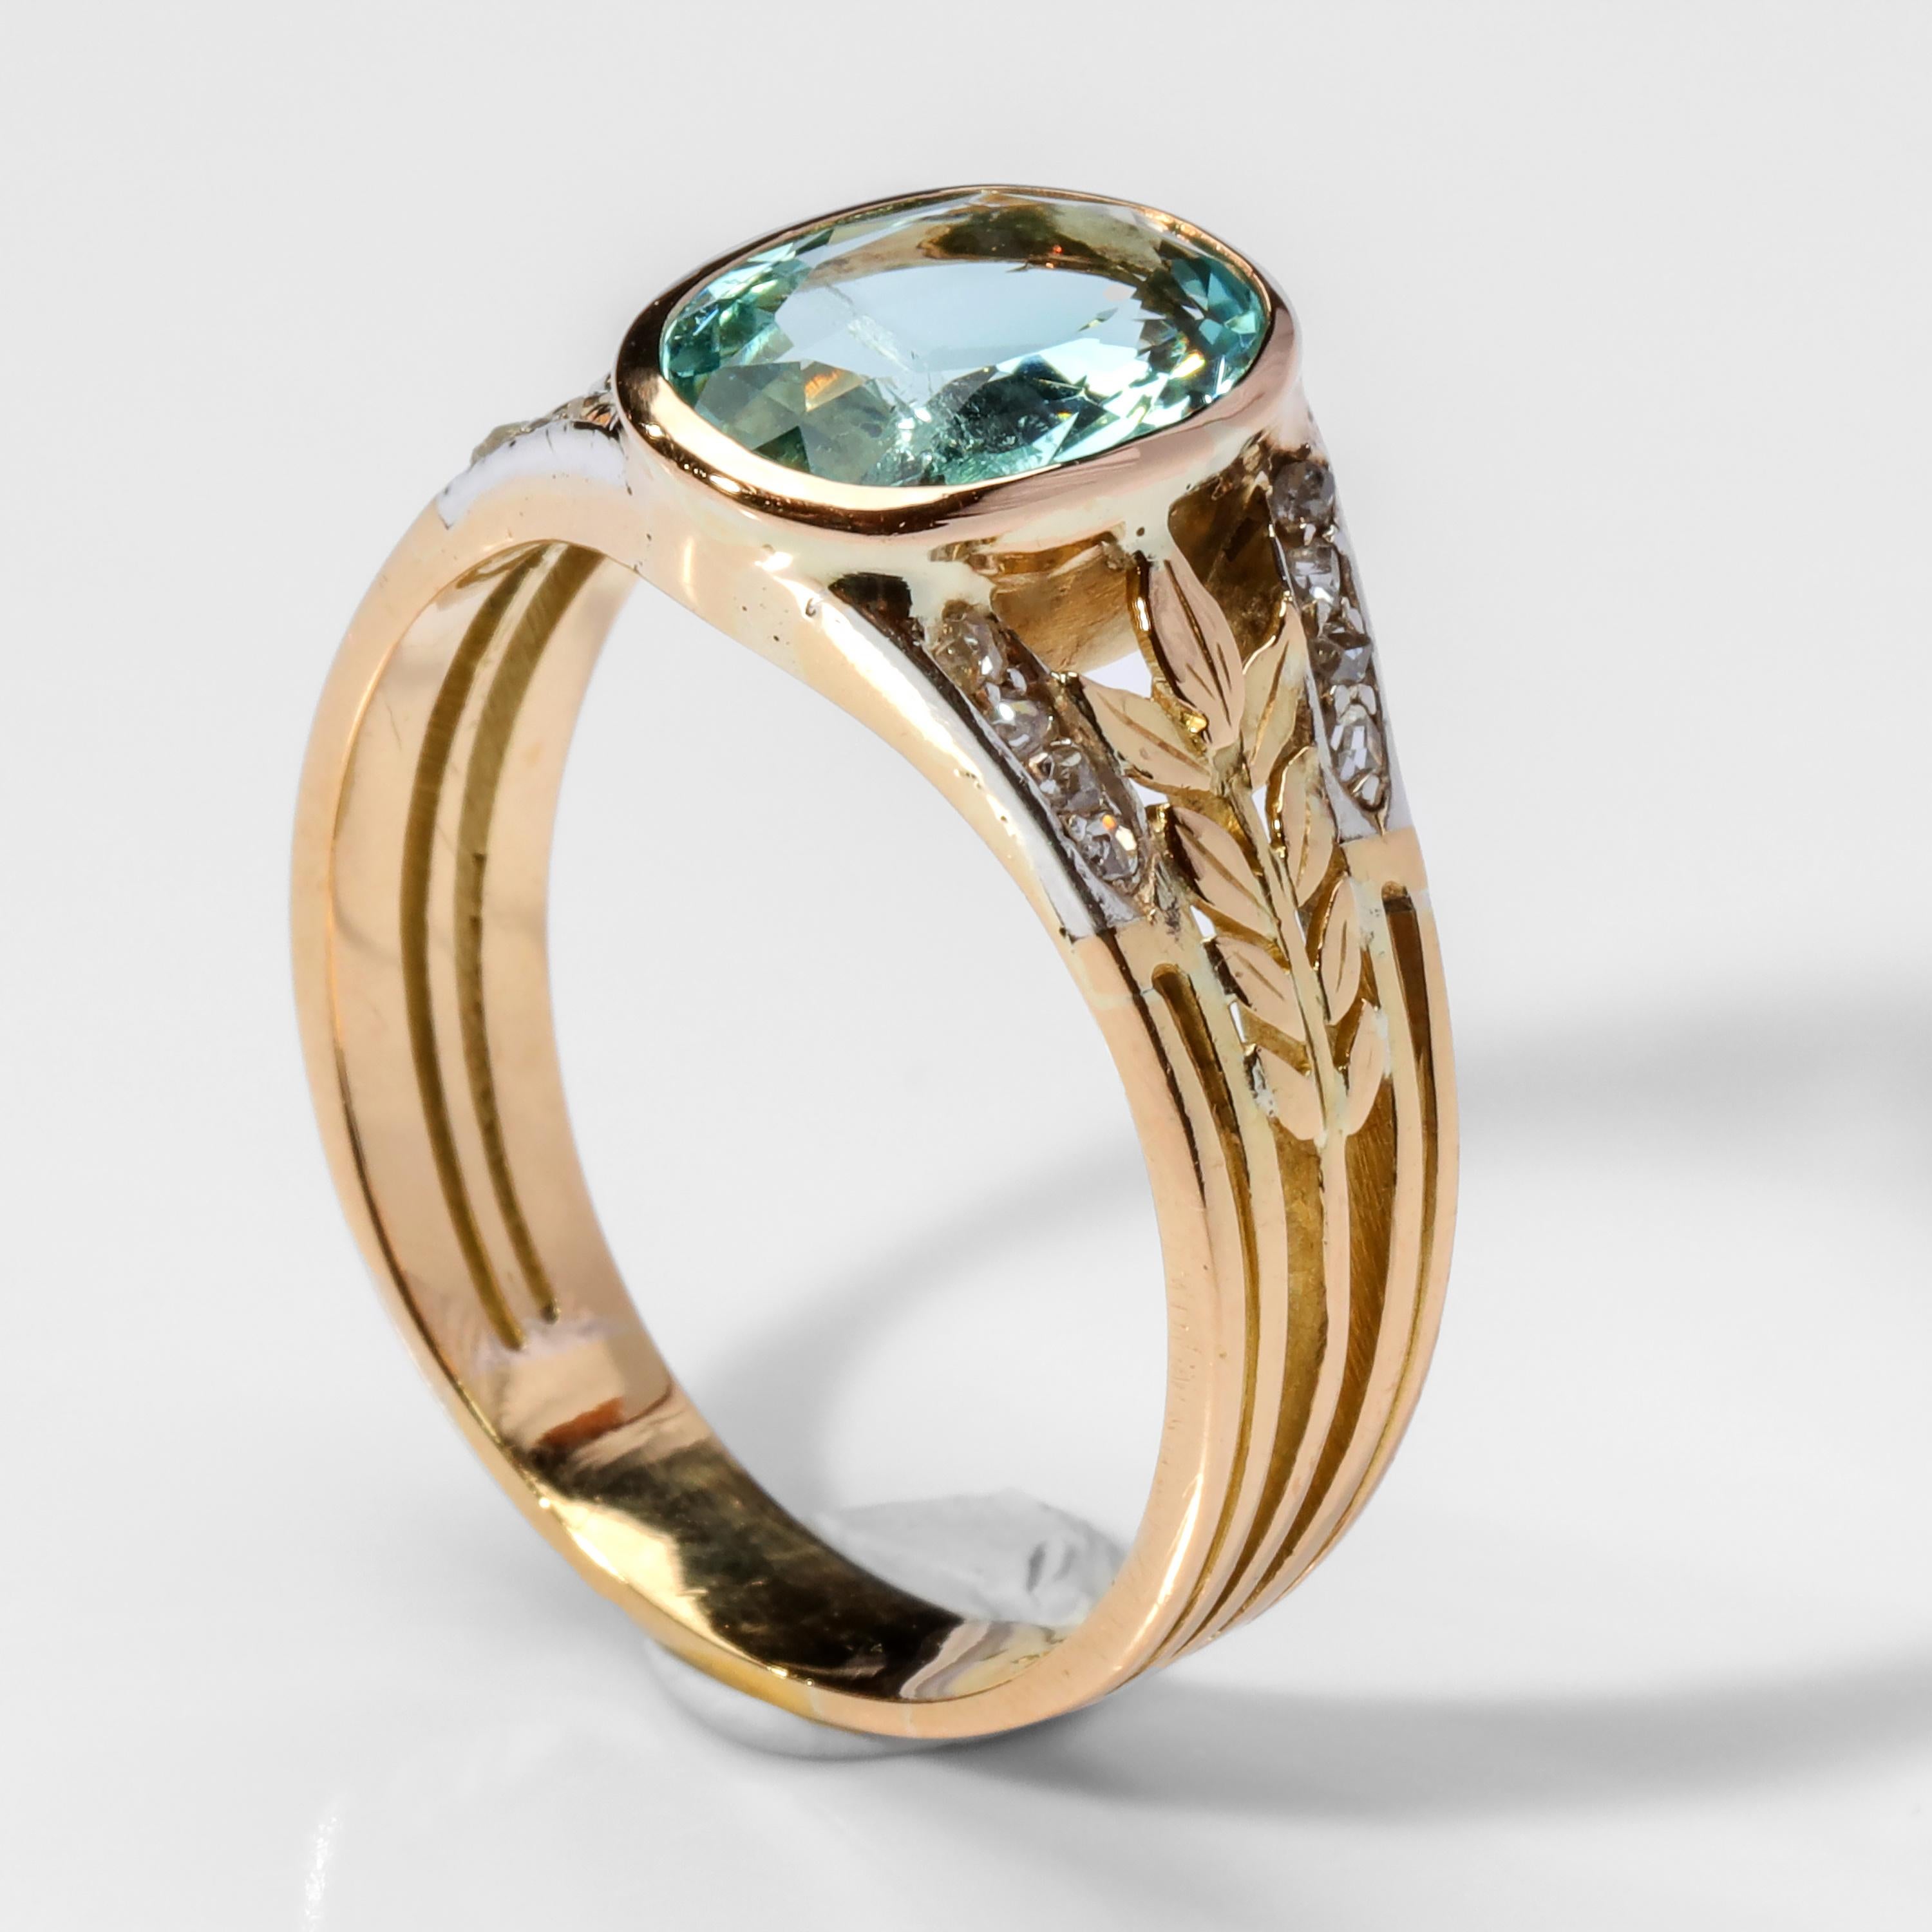 Art Nouveau Aquamarine Ring in Gold and Platinum with Diamonds from France, Titanic Era